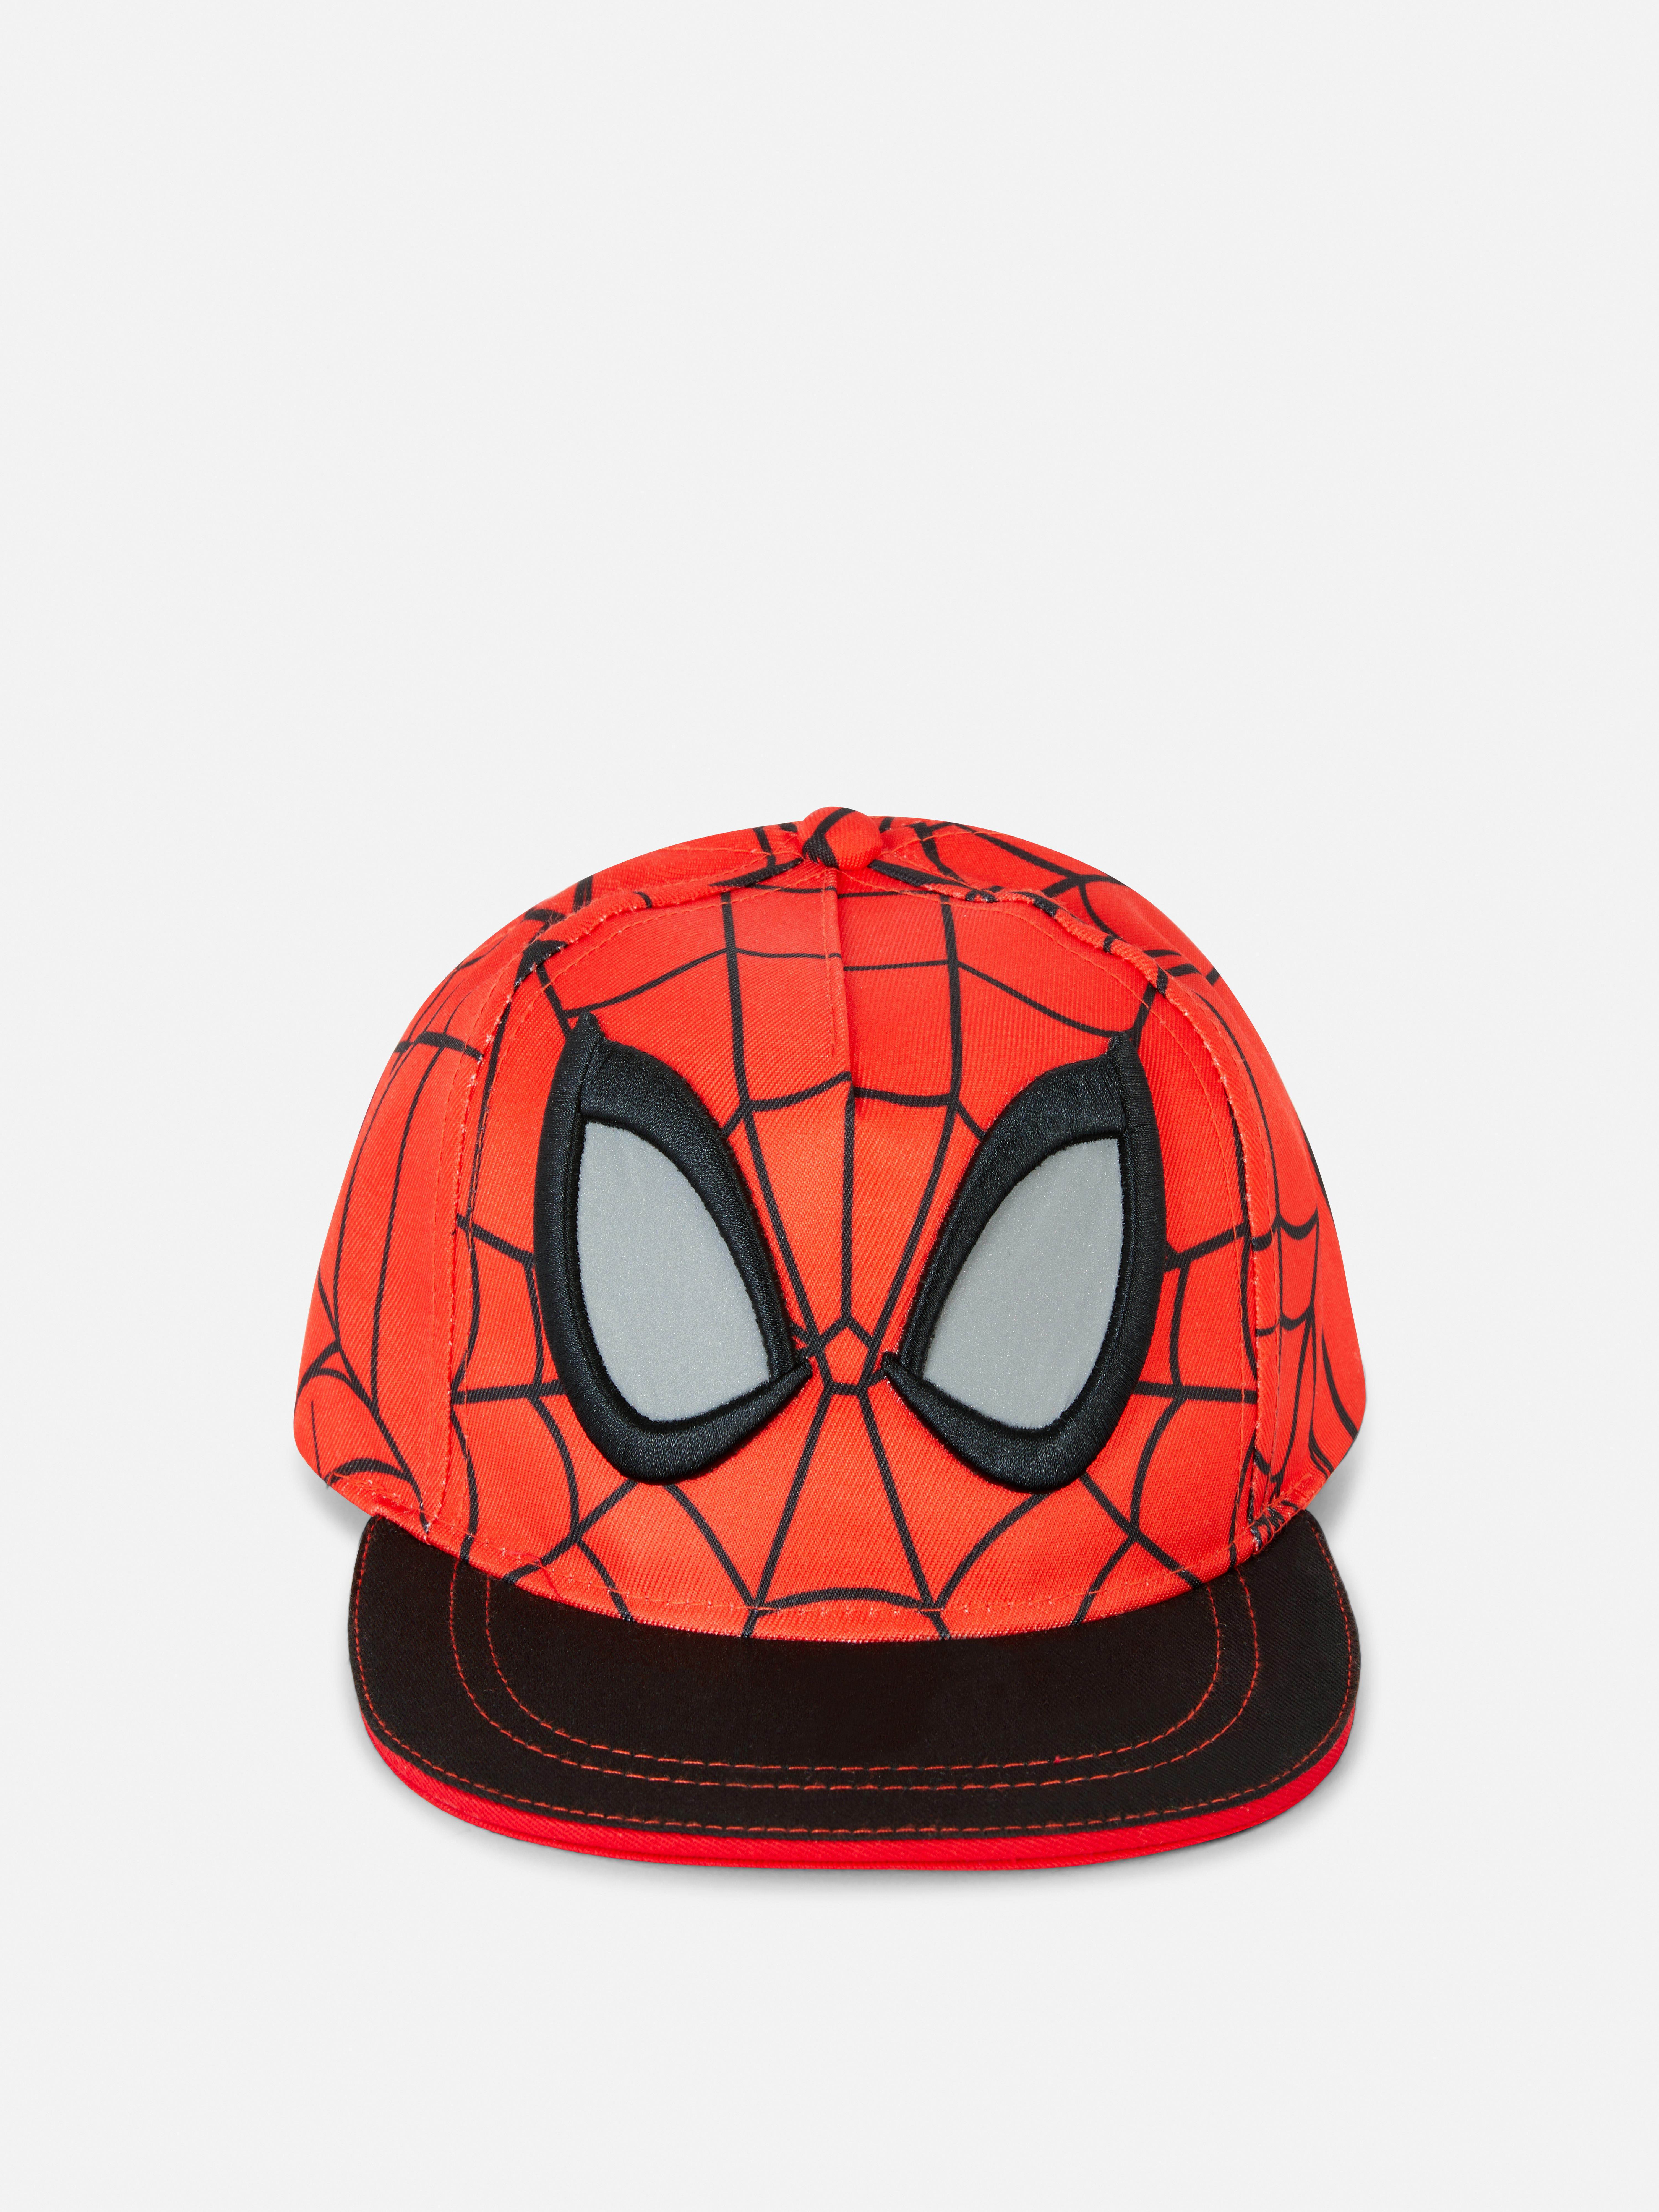 Marvel’s Spider-Man Baseball Cap